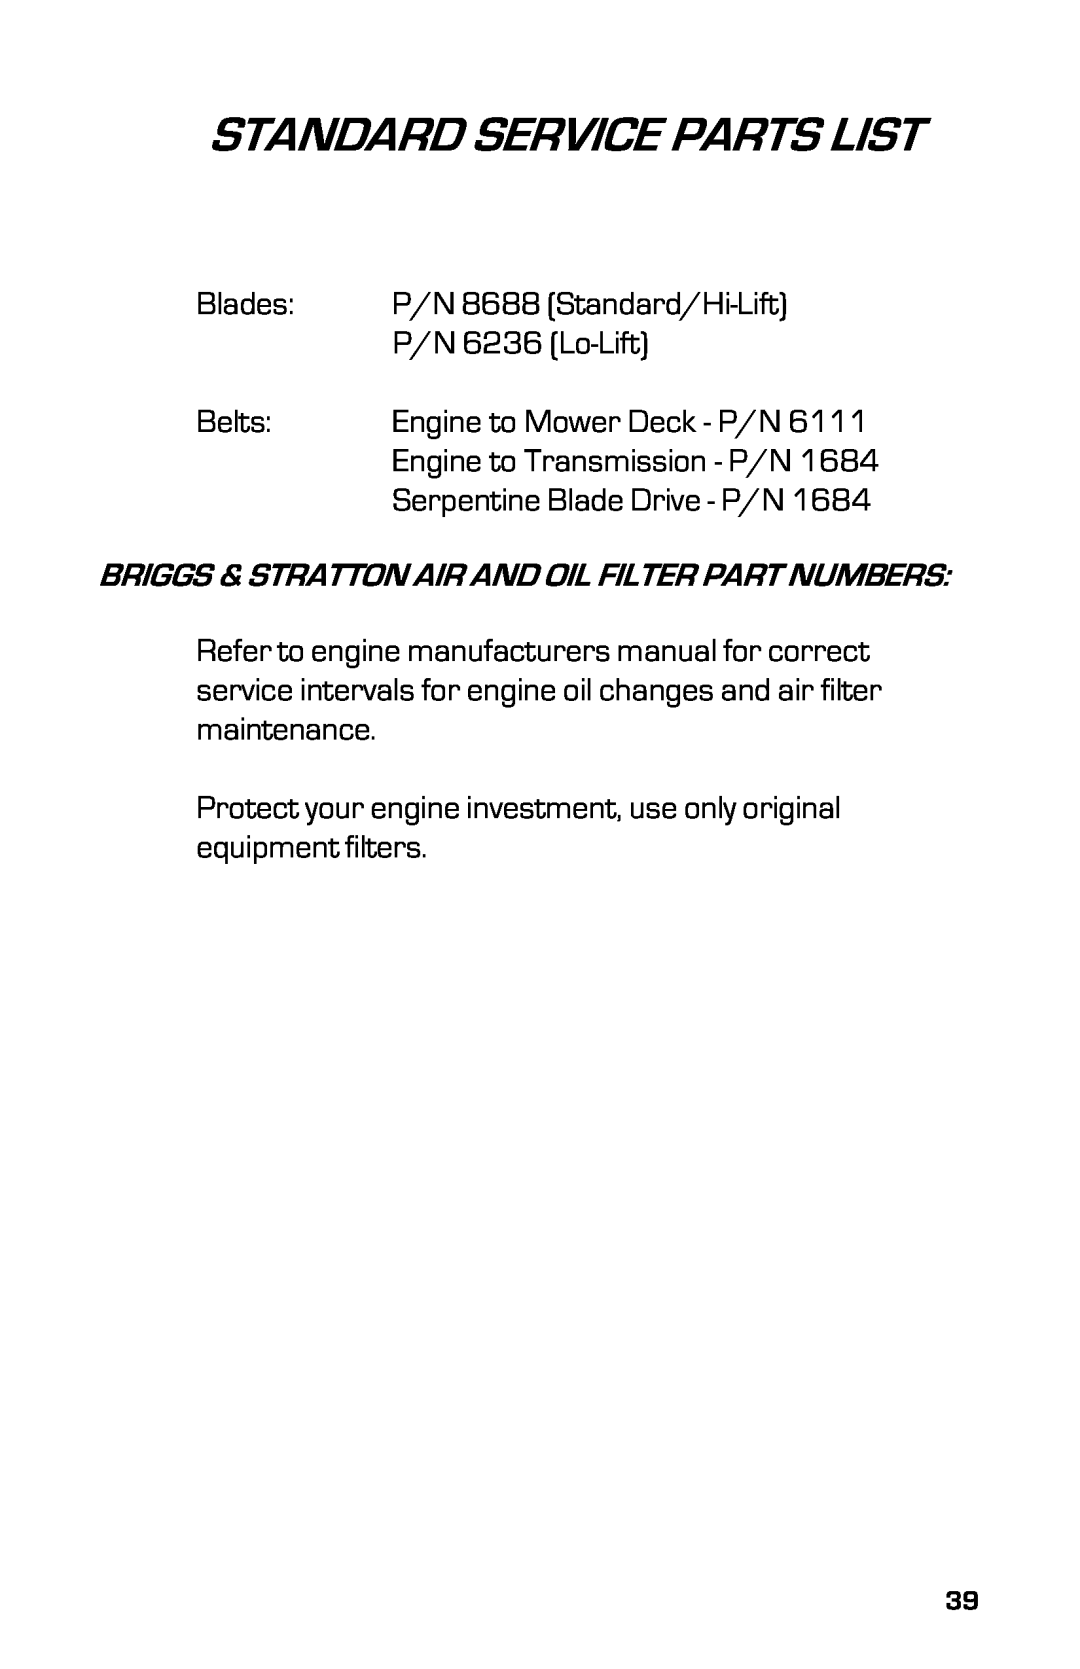 Dixon 13639-0702, 2003 manual Standard Service Parts List, Blades, P/N 8688 Standard/Hi-Lift, P/N 6236 Lo-Lift, Belts 